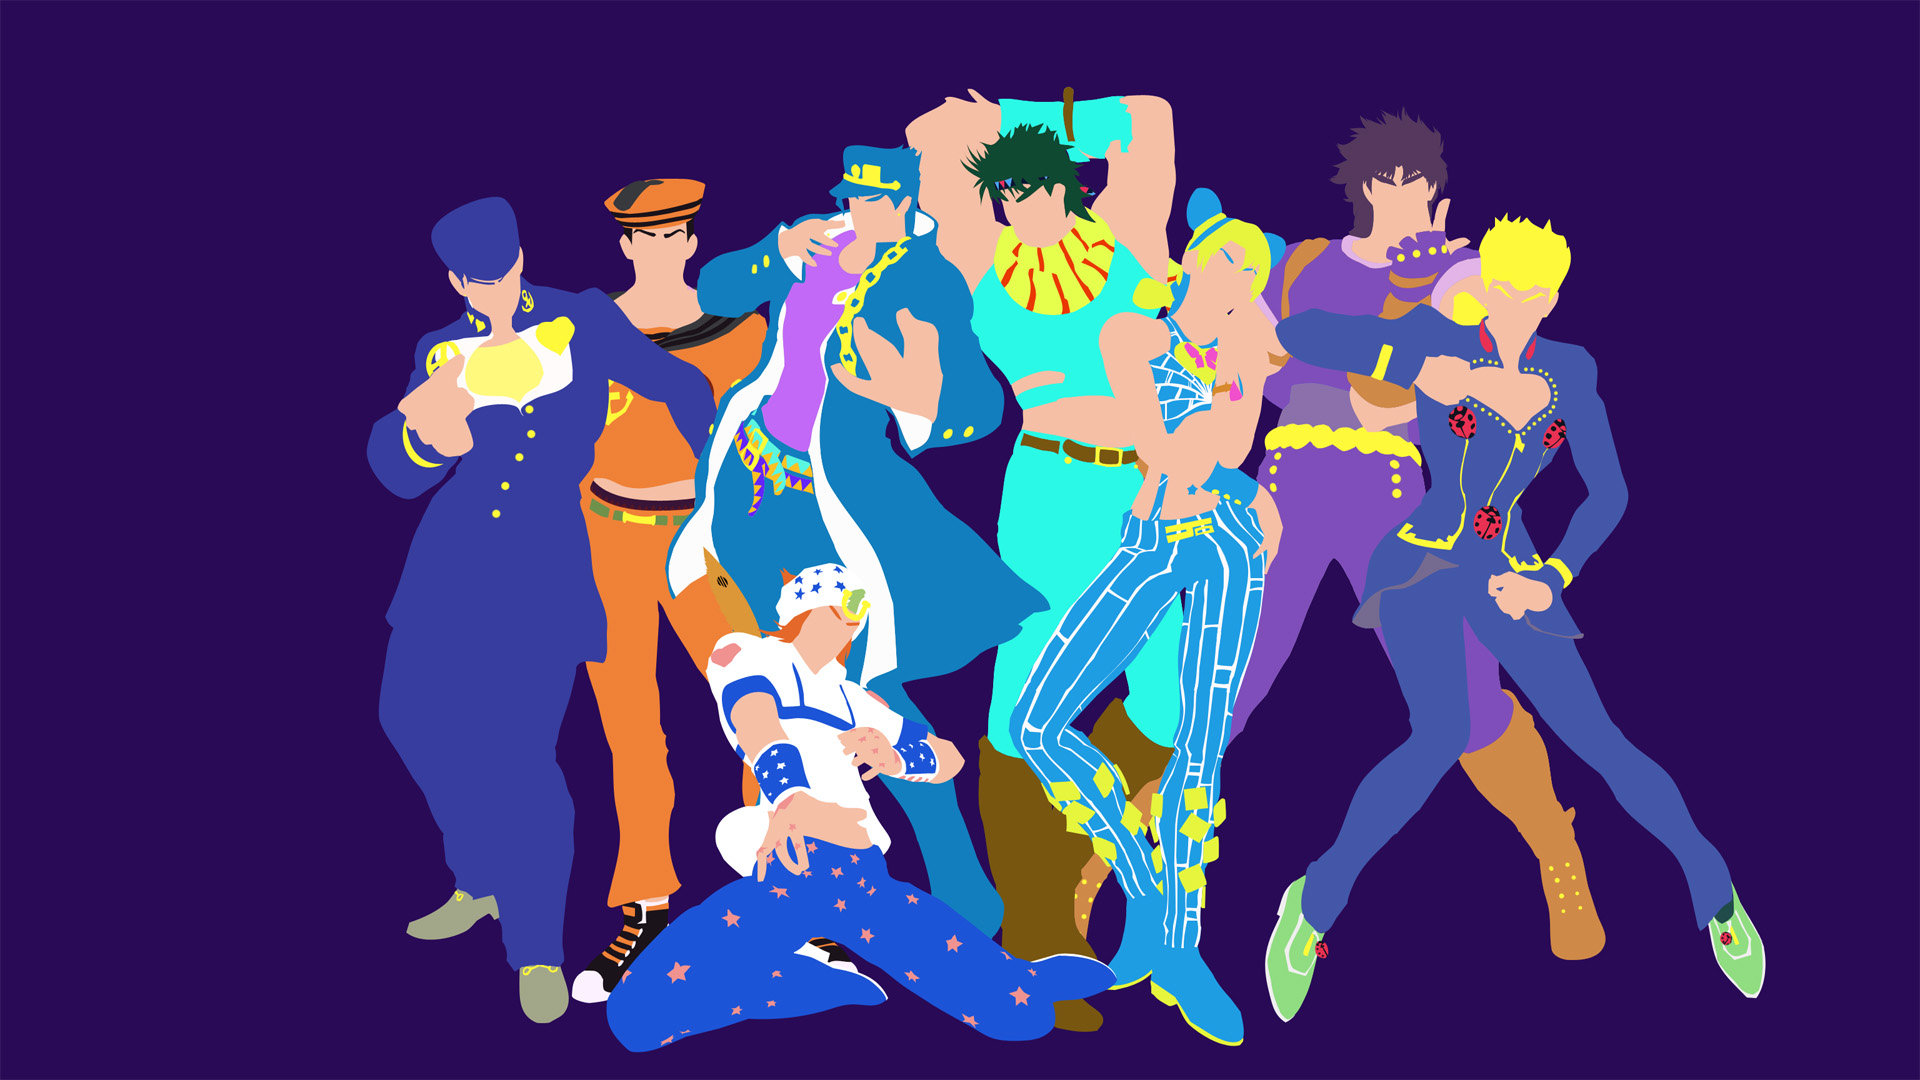 jojos wallpaper,social group,dancer,cartoon,musical,dance